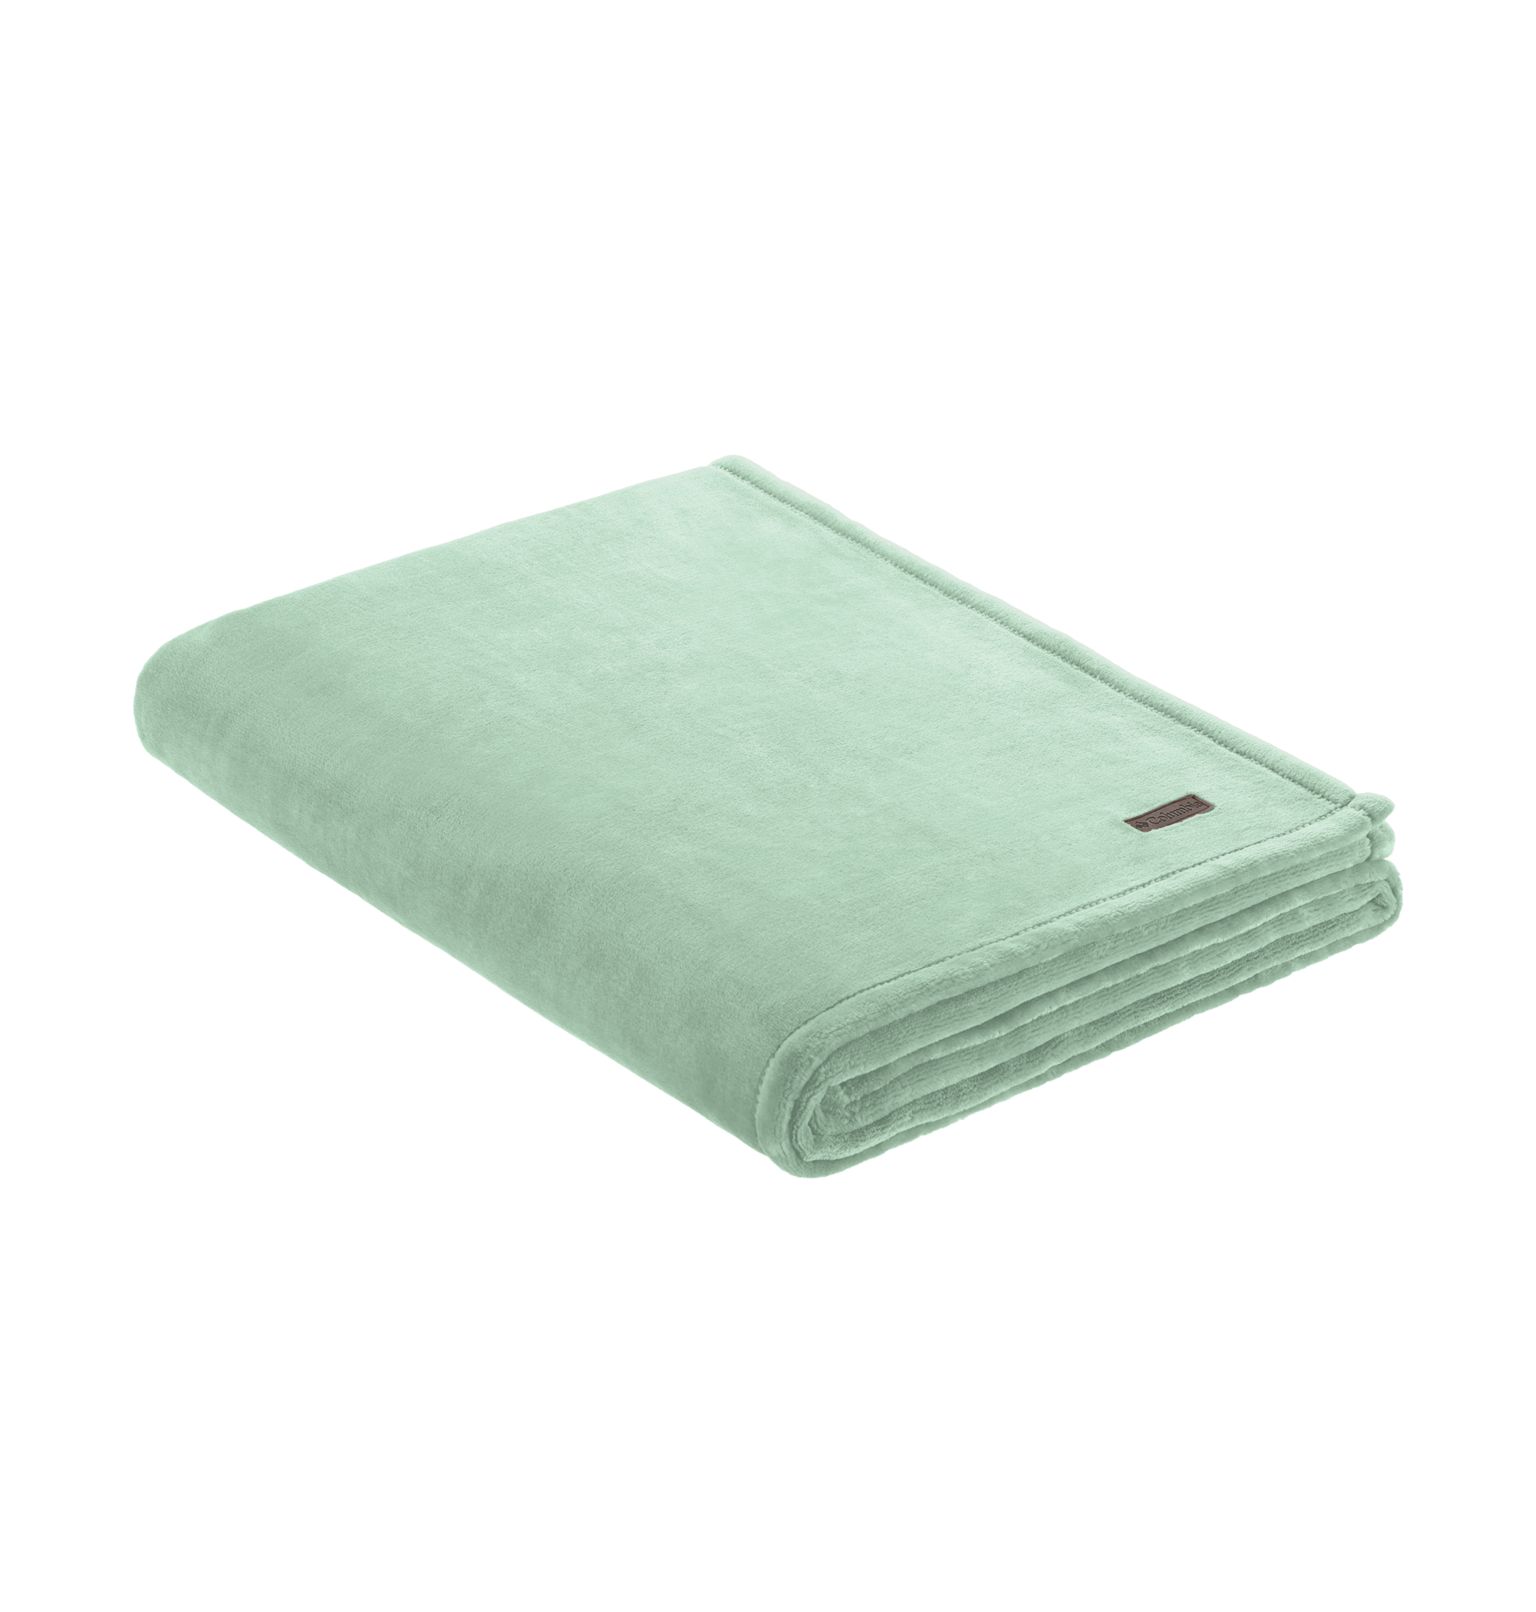 50" x 60" Columbia Plush Throw Blanket (Gray or Green) $12 & More + Free Shipping